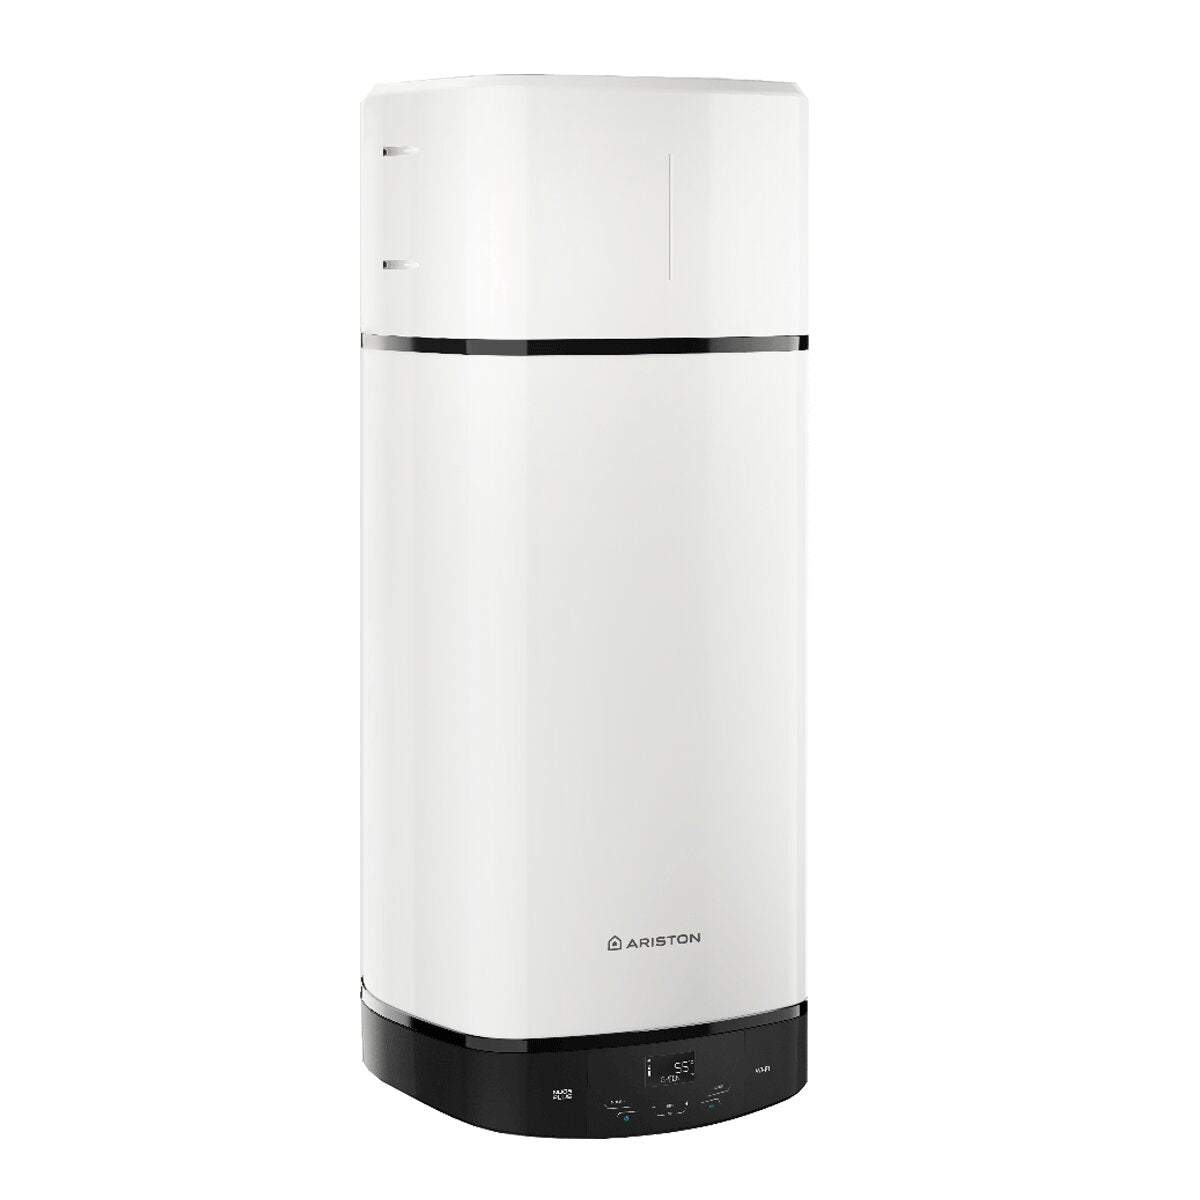 Ariston Nuos Plus R290 S2 WiFi A+ 110 Liter heat pump water heater